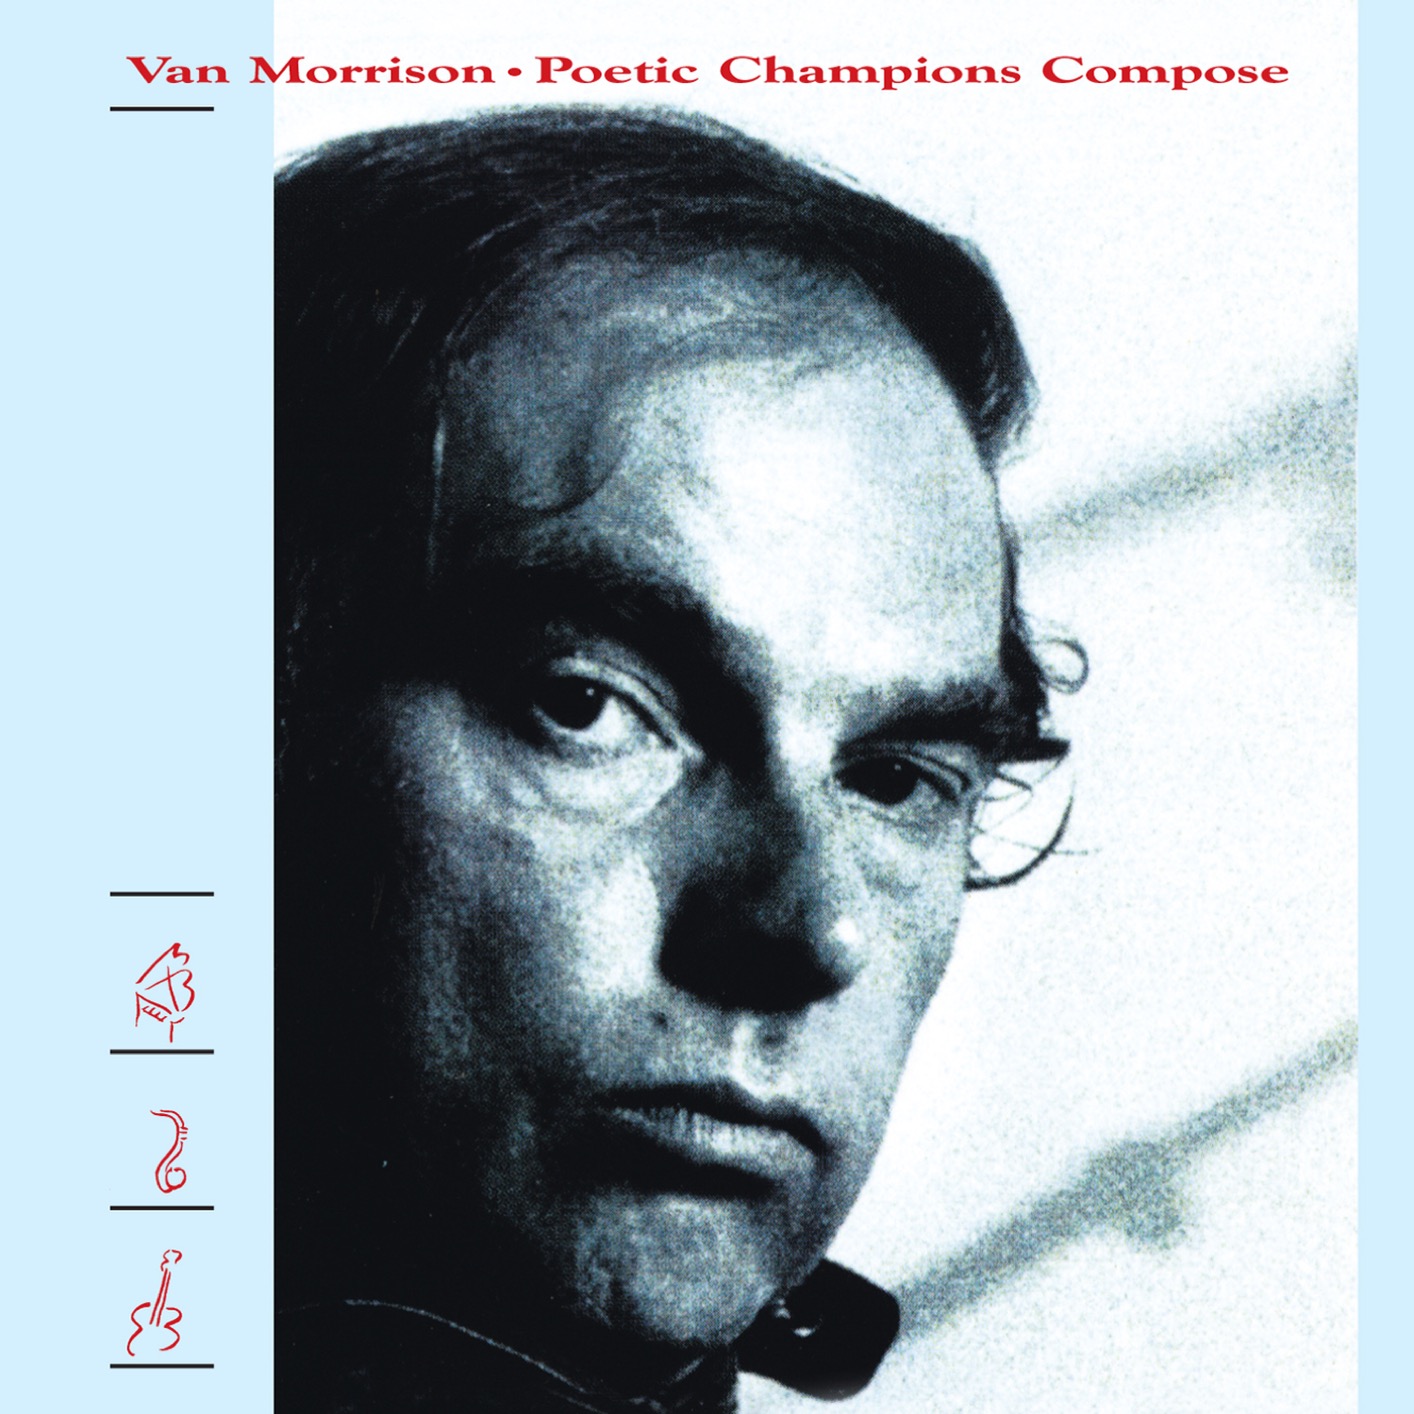 Van Morrison – Poetic Champions Compose (Remastered) (1987/2020) [FLAC 24bit/96kHz]